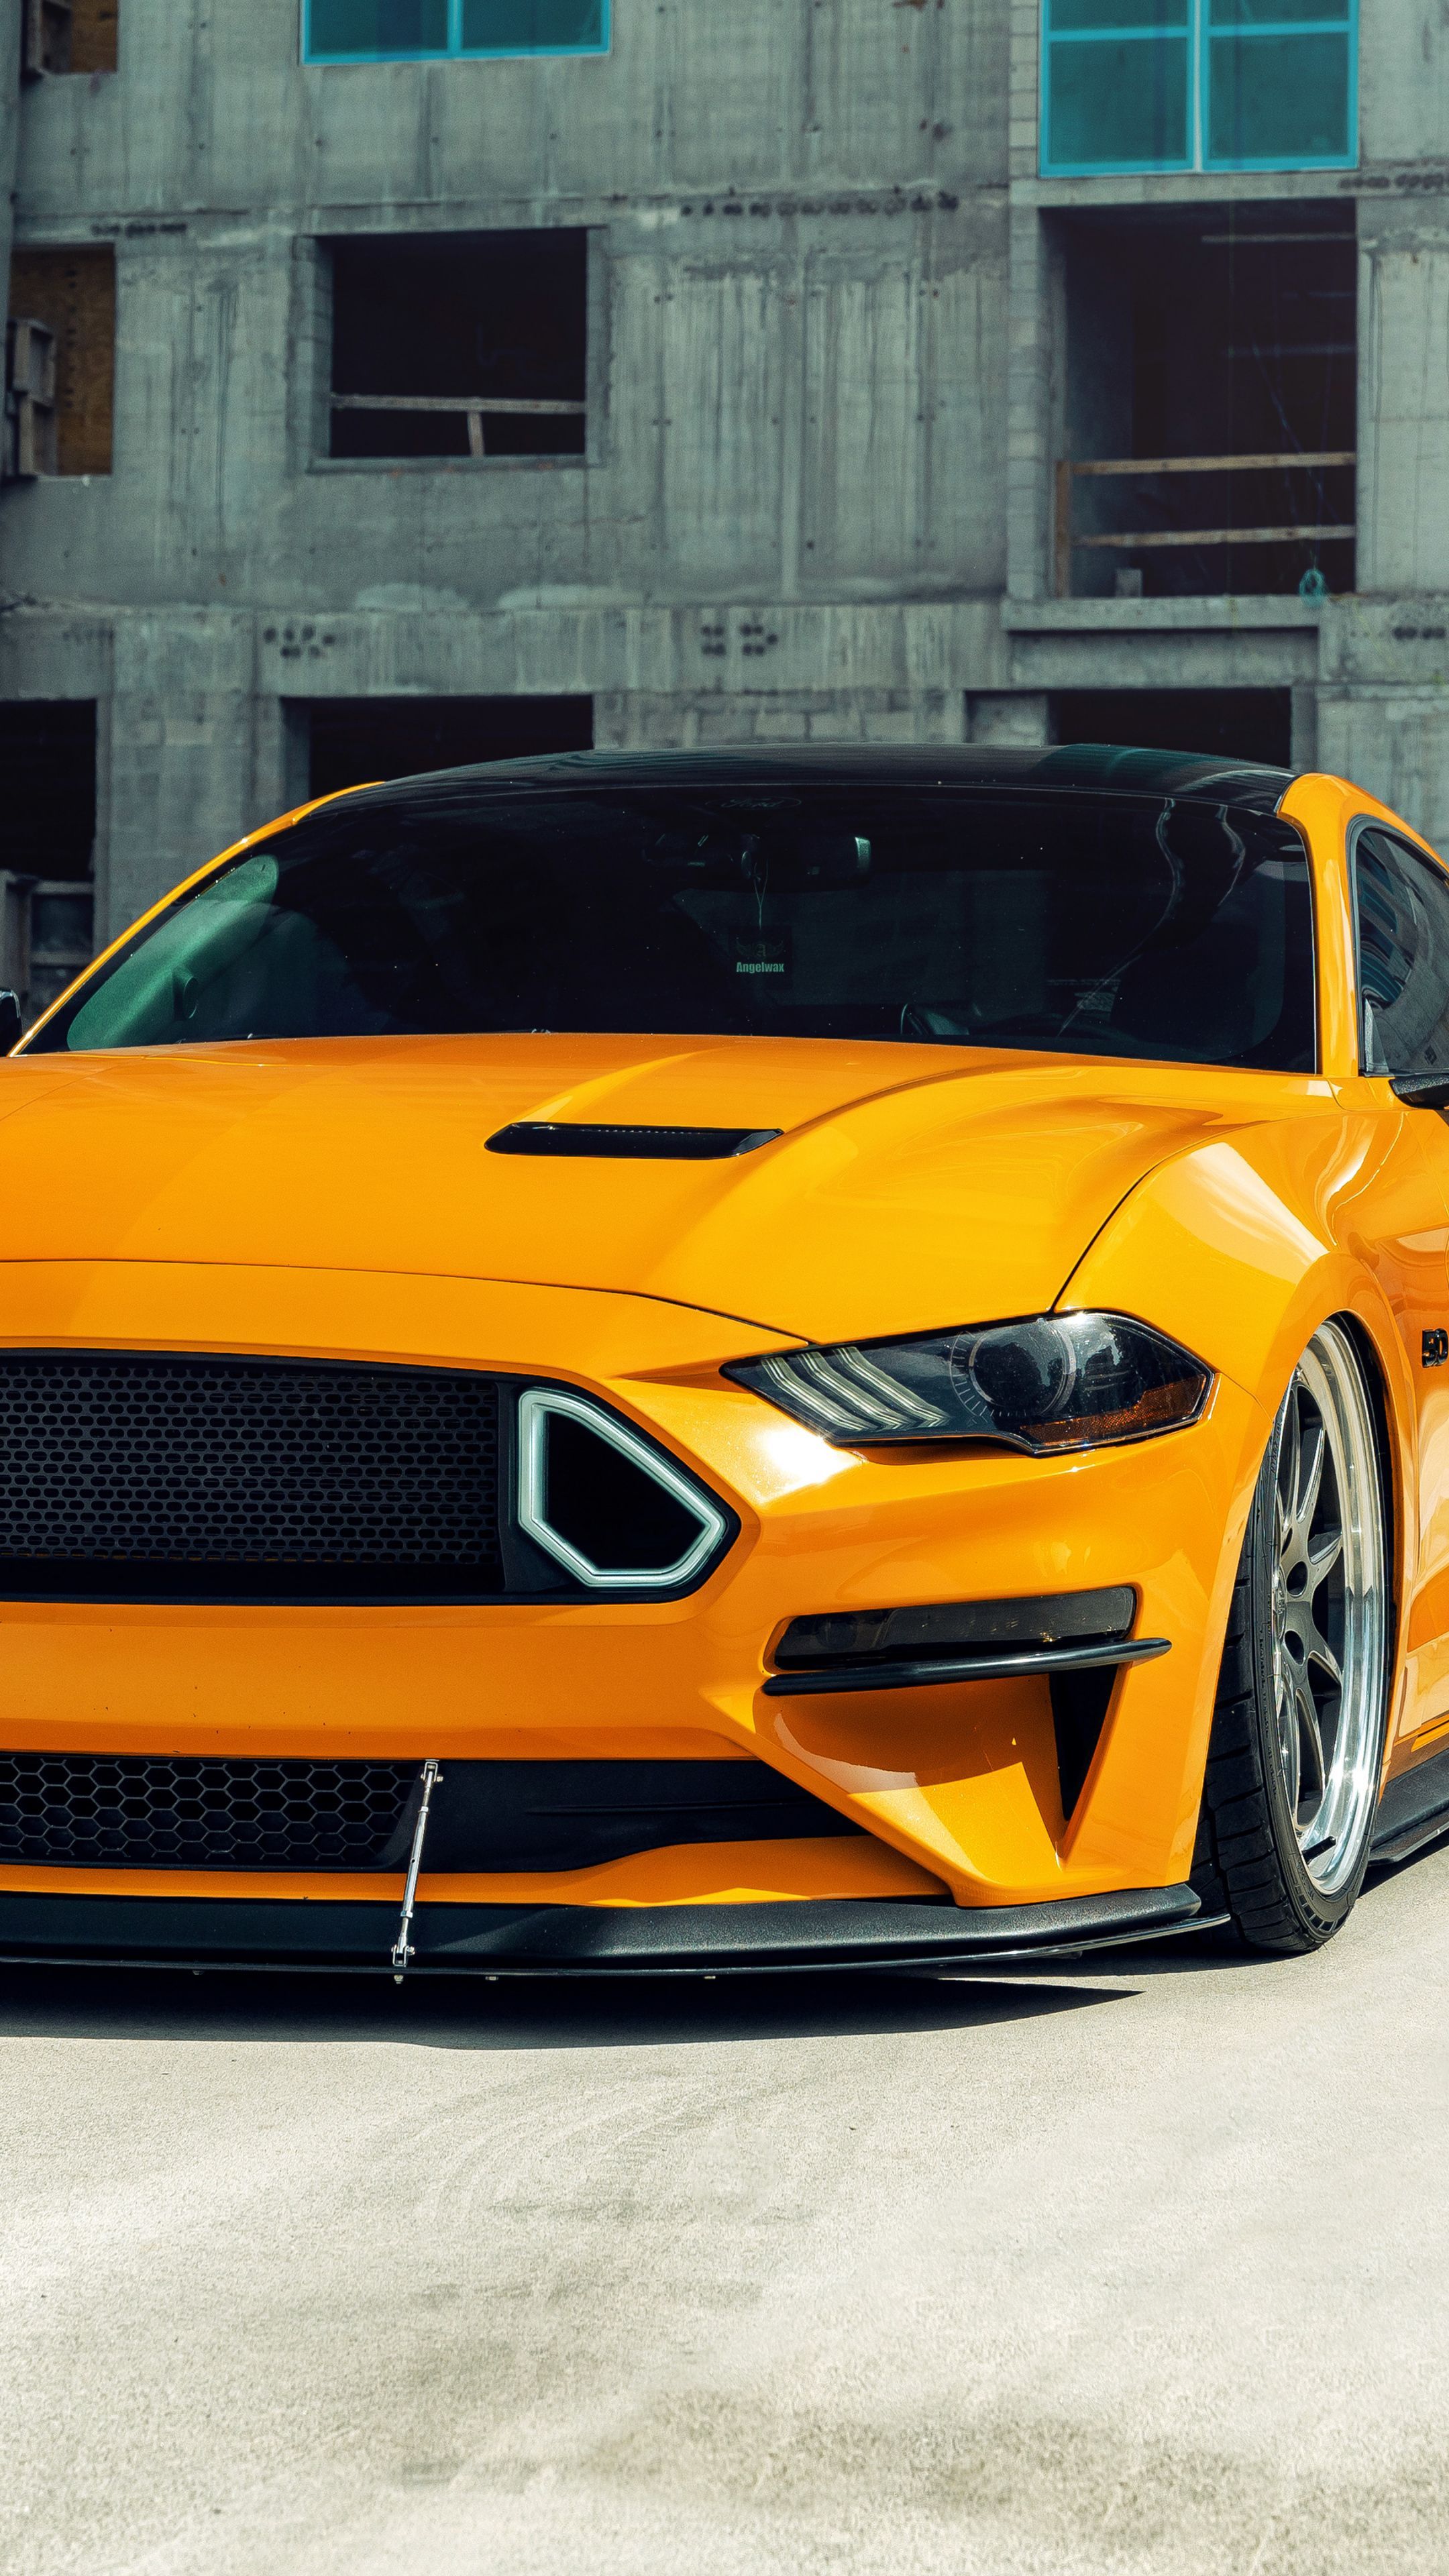 Yellow Ford Mustang GT, 2020 wallpaper. Mustang gt, Ford mustang, Mustang